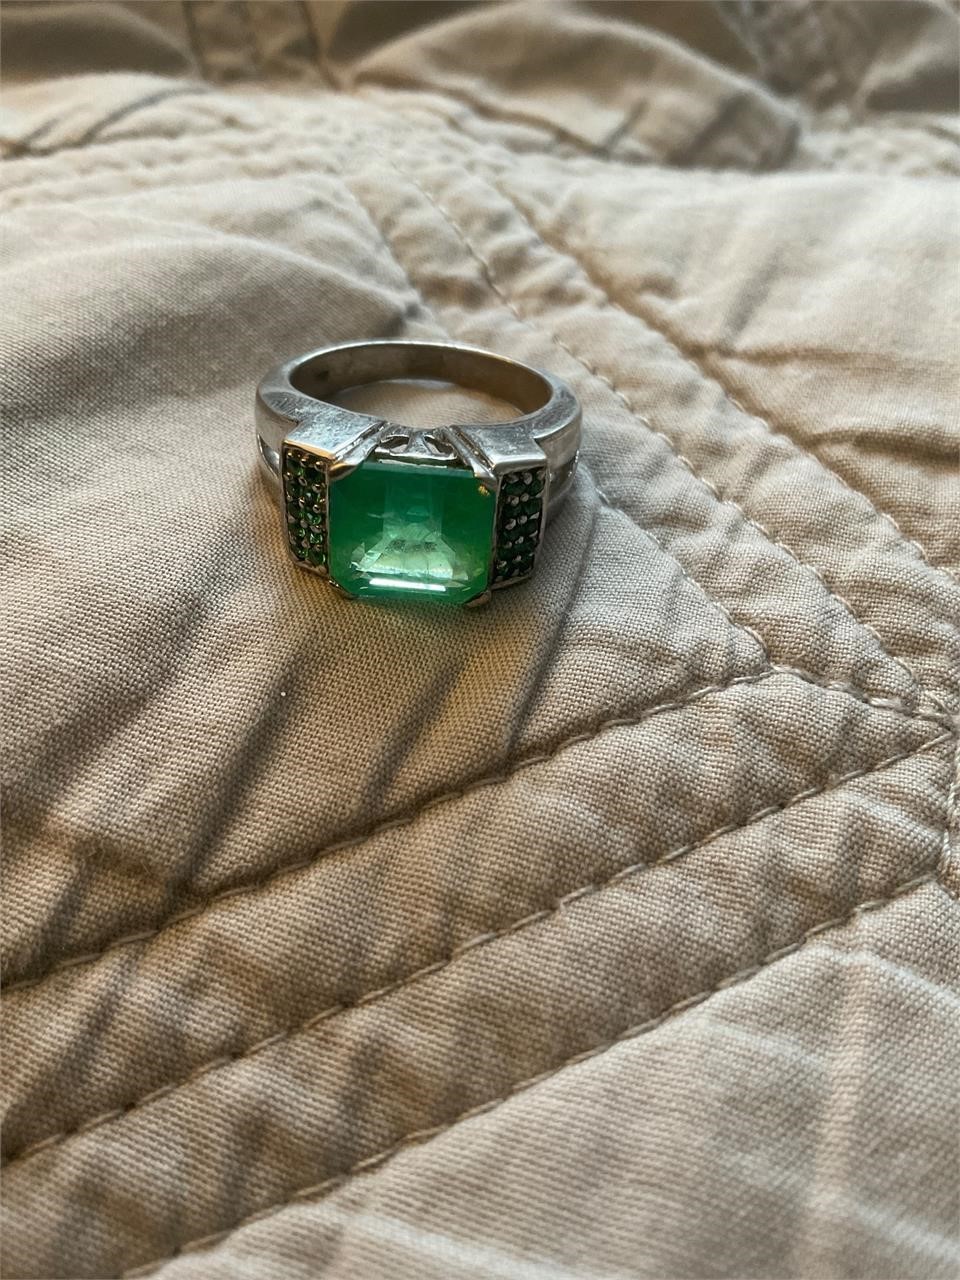 Stunning 5+ carat emerald ring silver with rodium